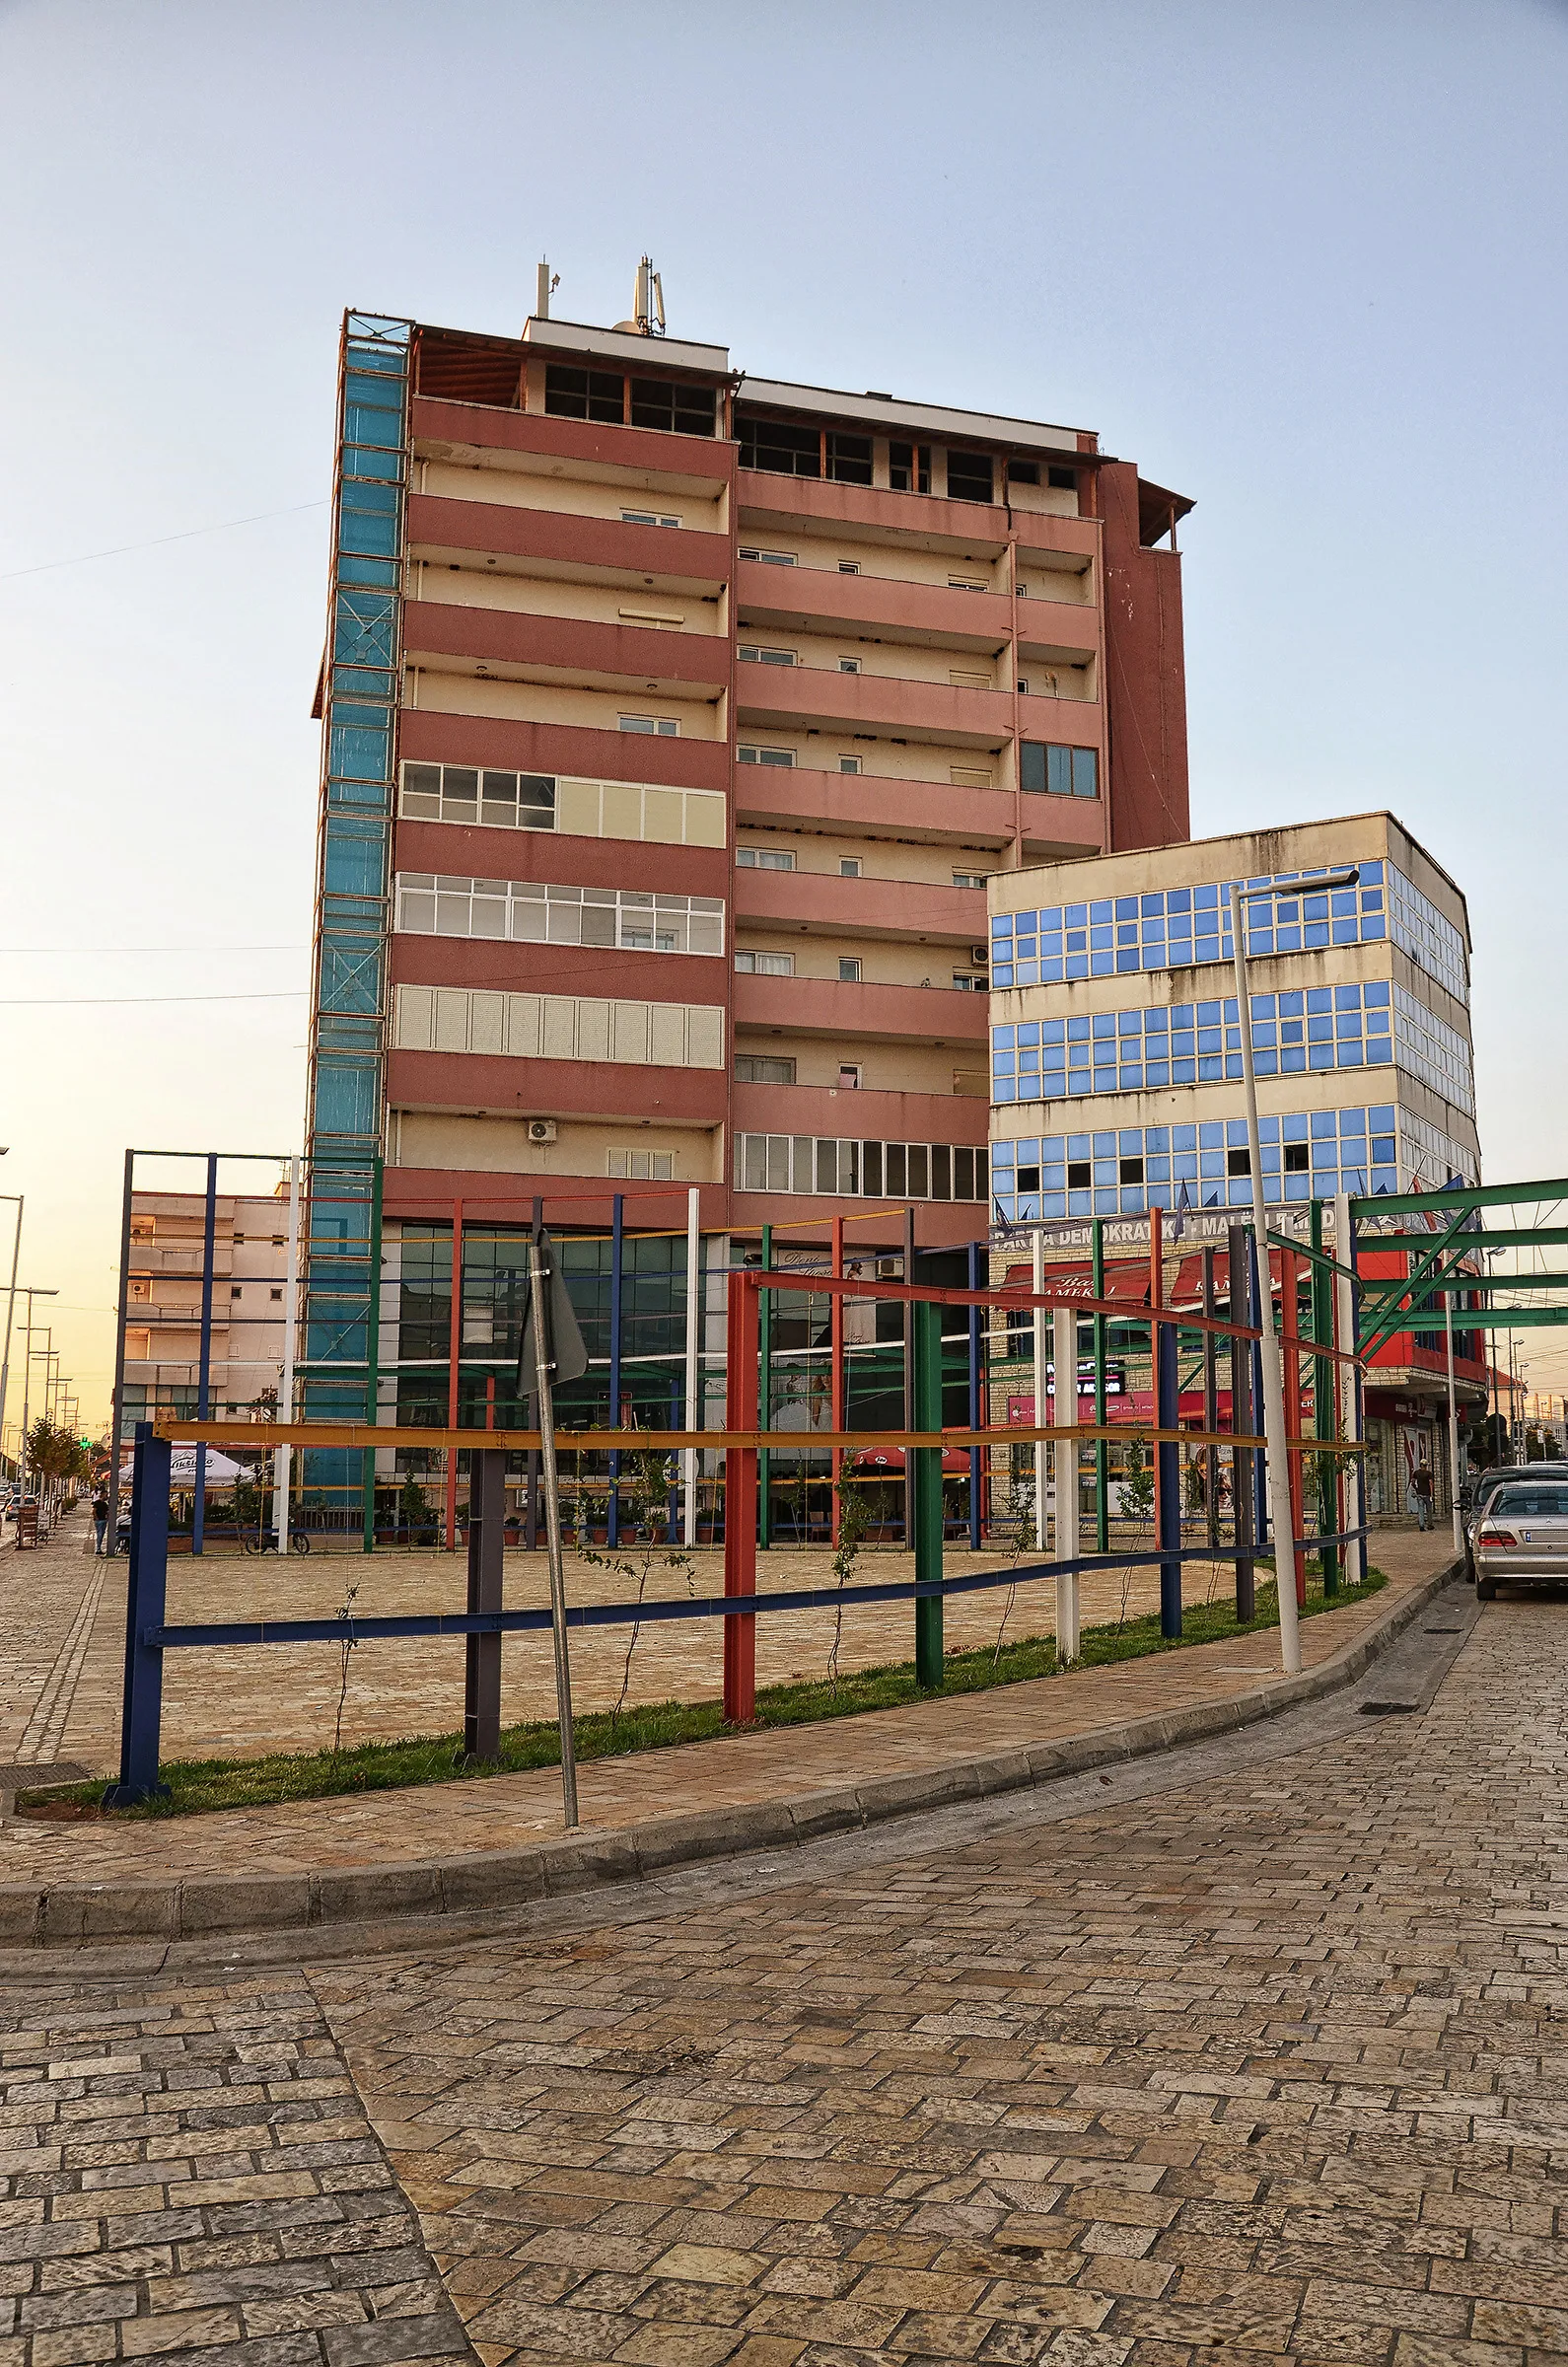 Photo showing: The main square of Koplik, Albania